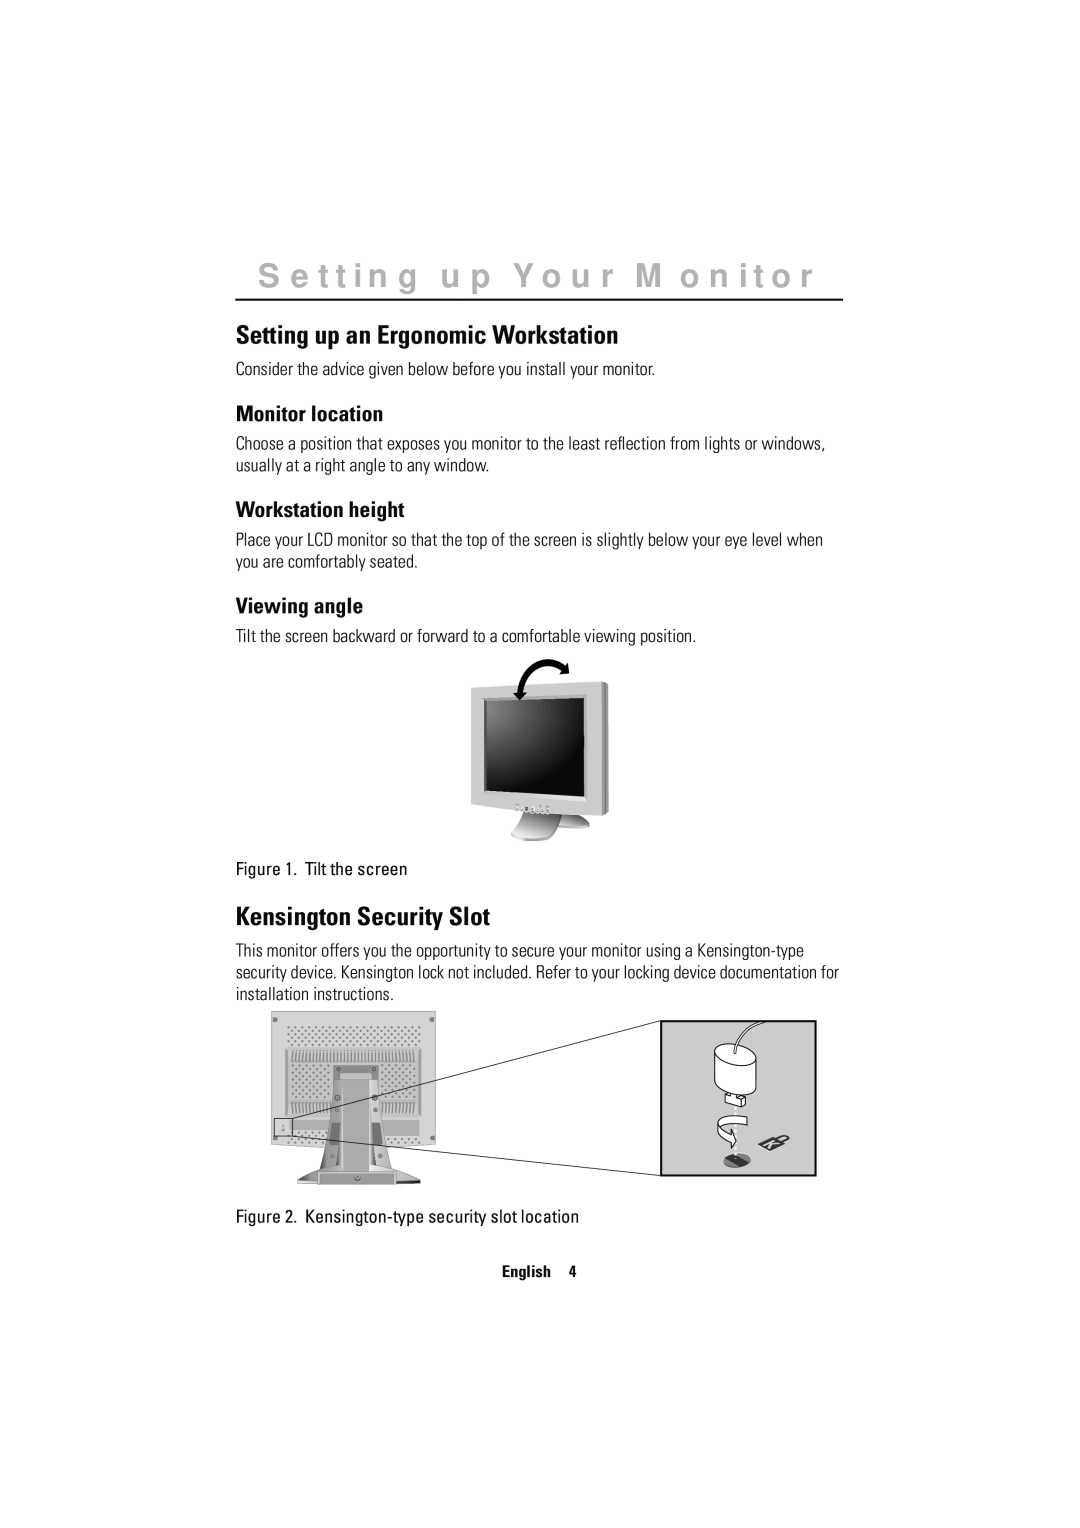 Samsung CN15MSAAN/EDC, CN15MSPN/EDC Setting up Your Monitor, Setting up an Ergonomic Workstation, Kensington Security Slot 